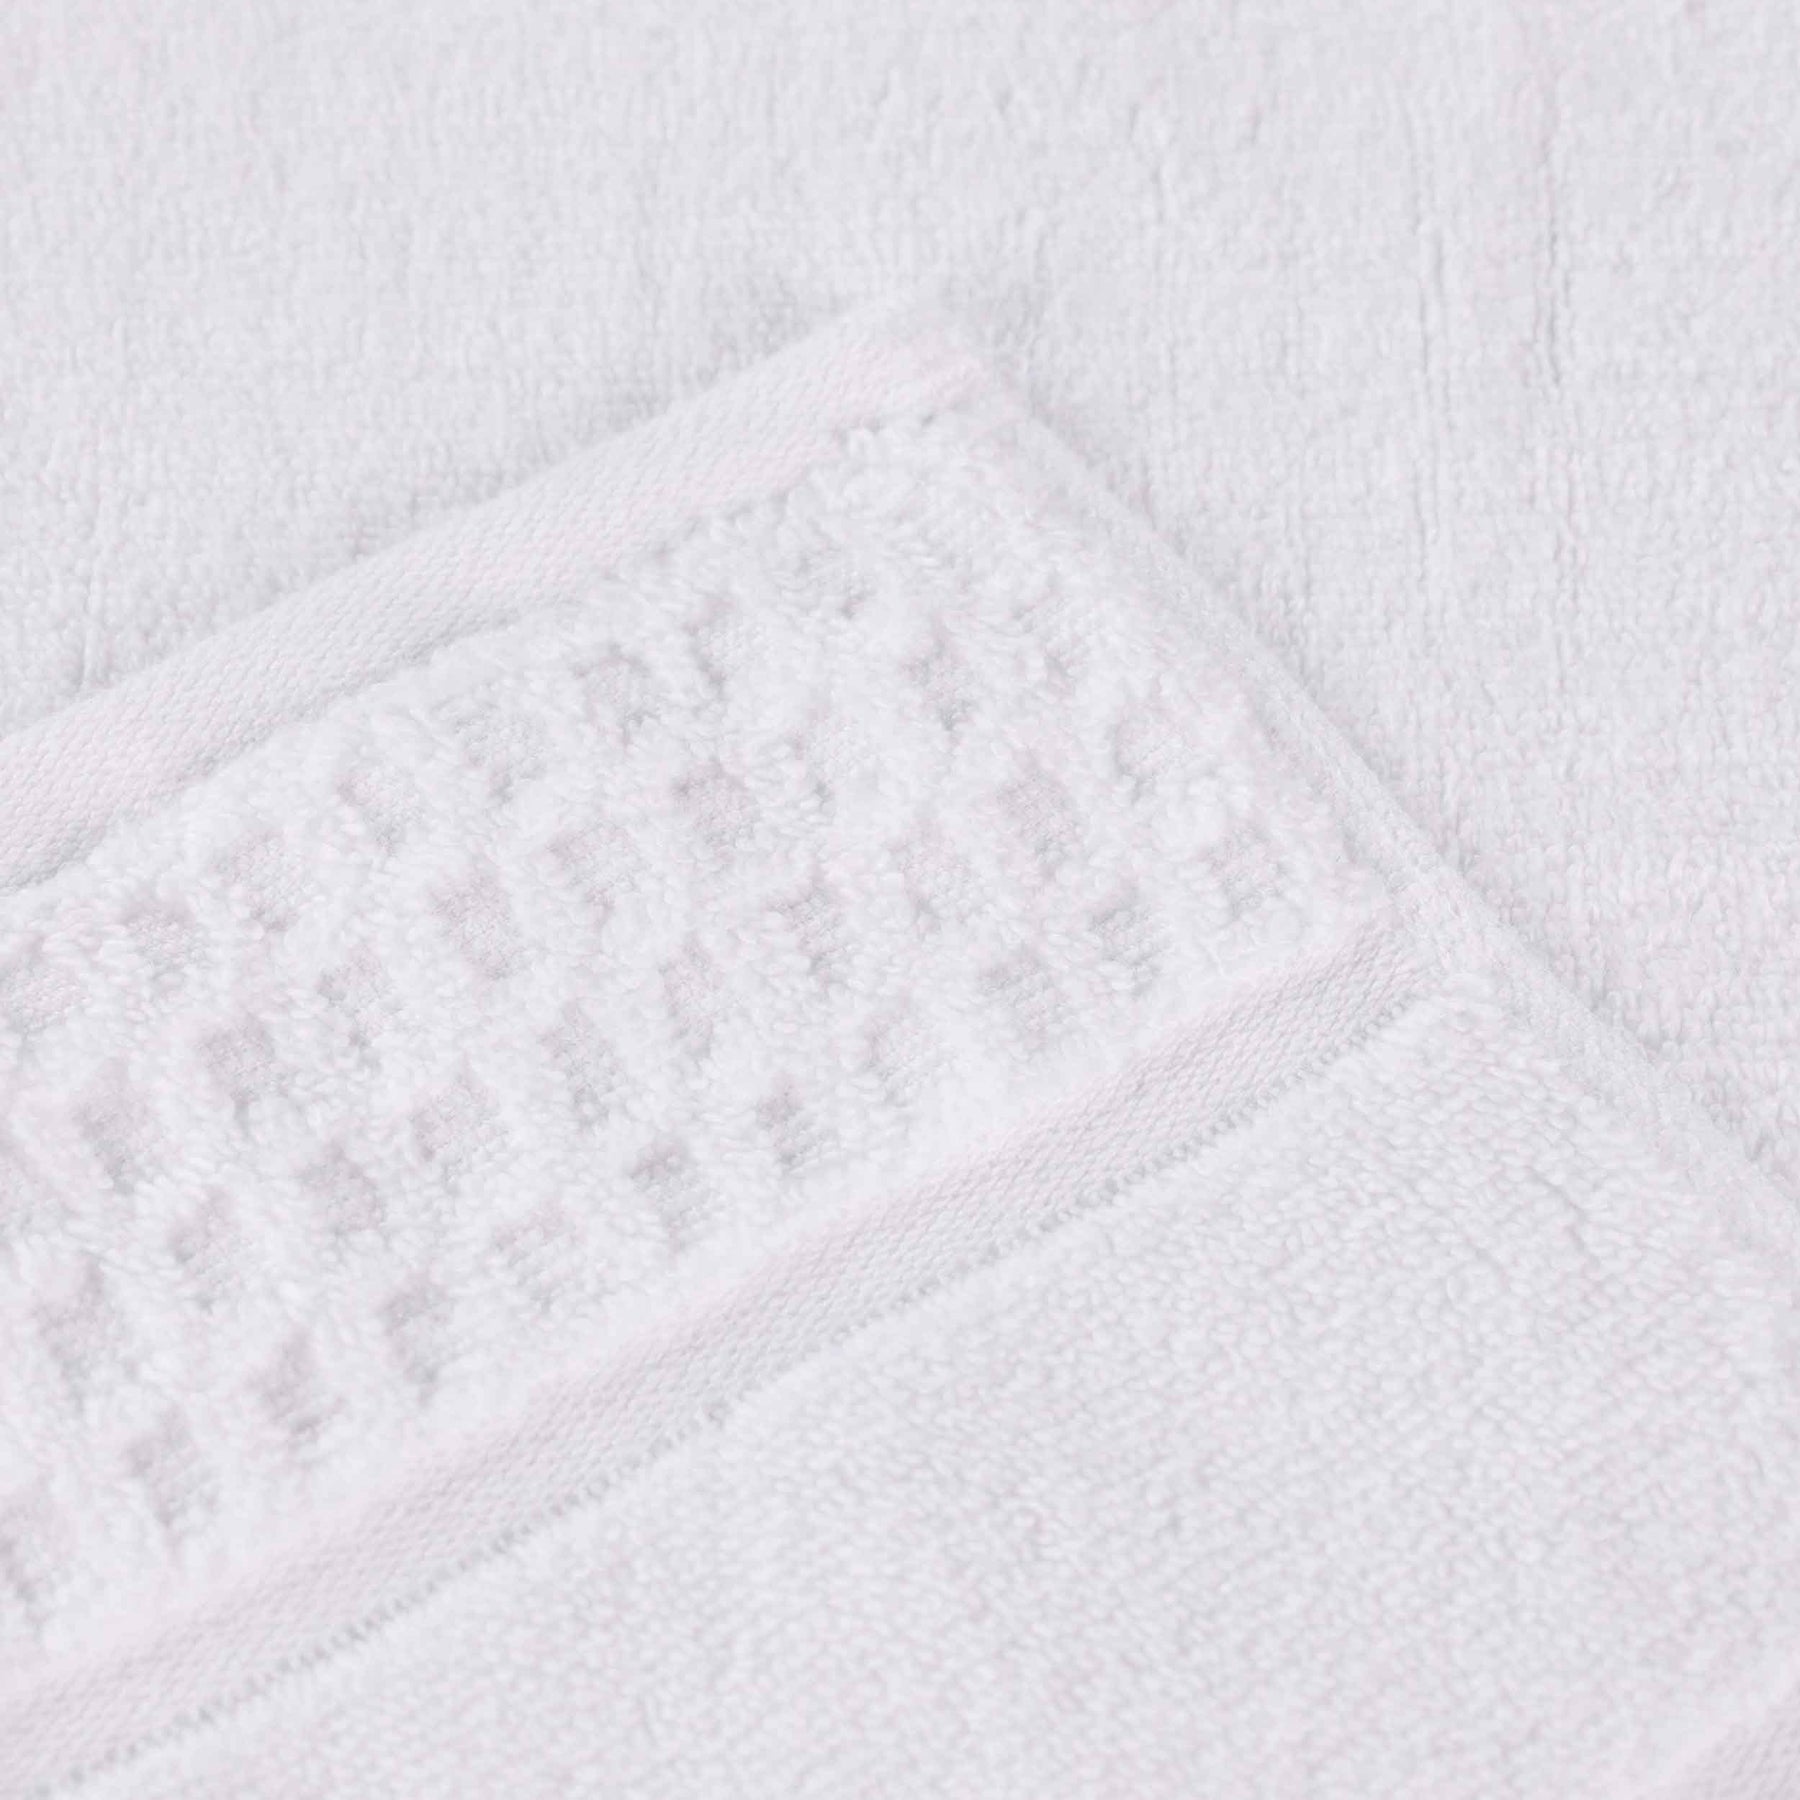 Zero Twist Cotton Waffle Honeycomb Plush Soft 12 Piece Towel Set - White